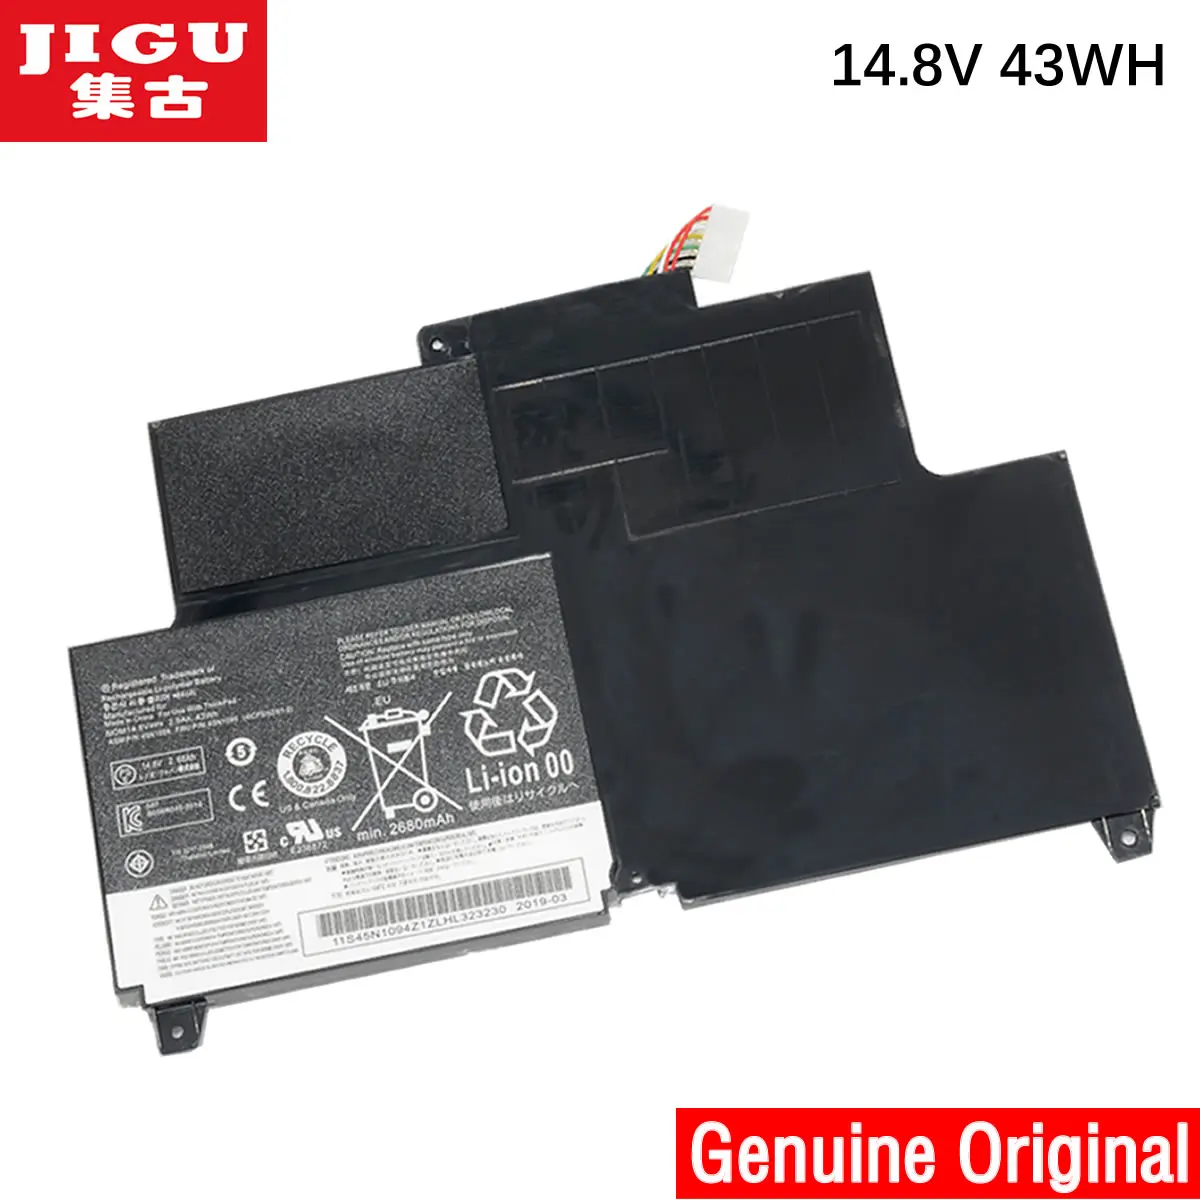 

JIGU 14.8V 43WH Original Laptop Battery 45N1092 45N1093 45N1094 45N1095 For LENOVO ThinkPad S230u Twist Twist S203u